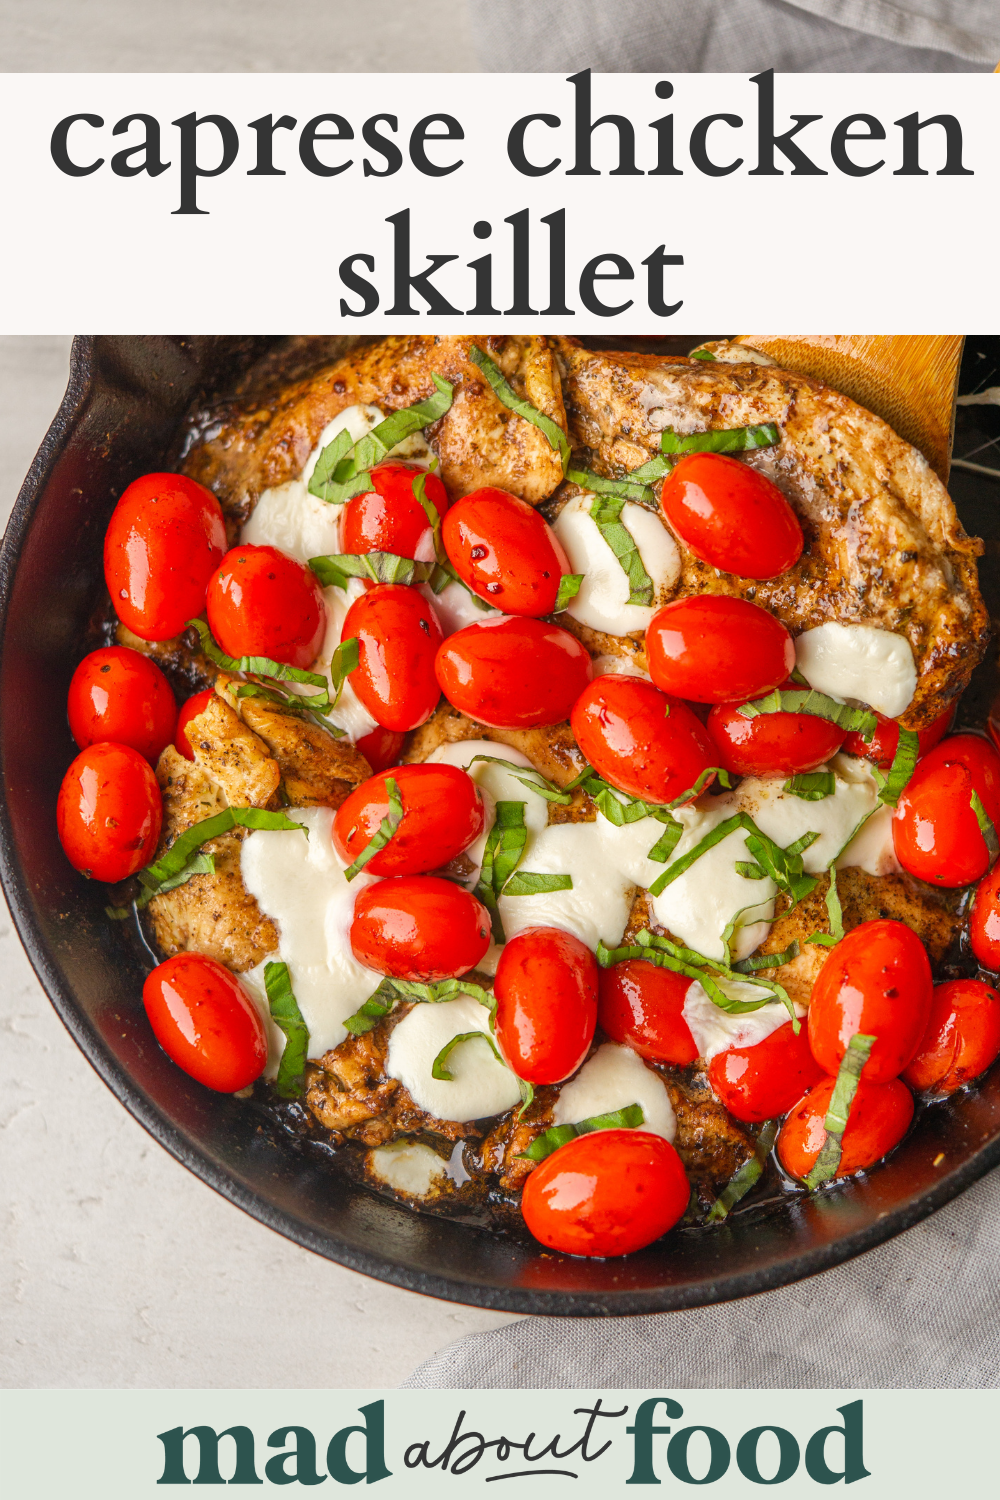 Image for pinning Caprese Chicken Skillet recipe on Pinterest